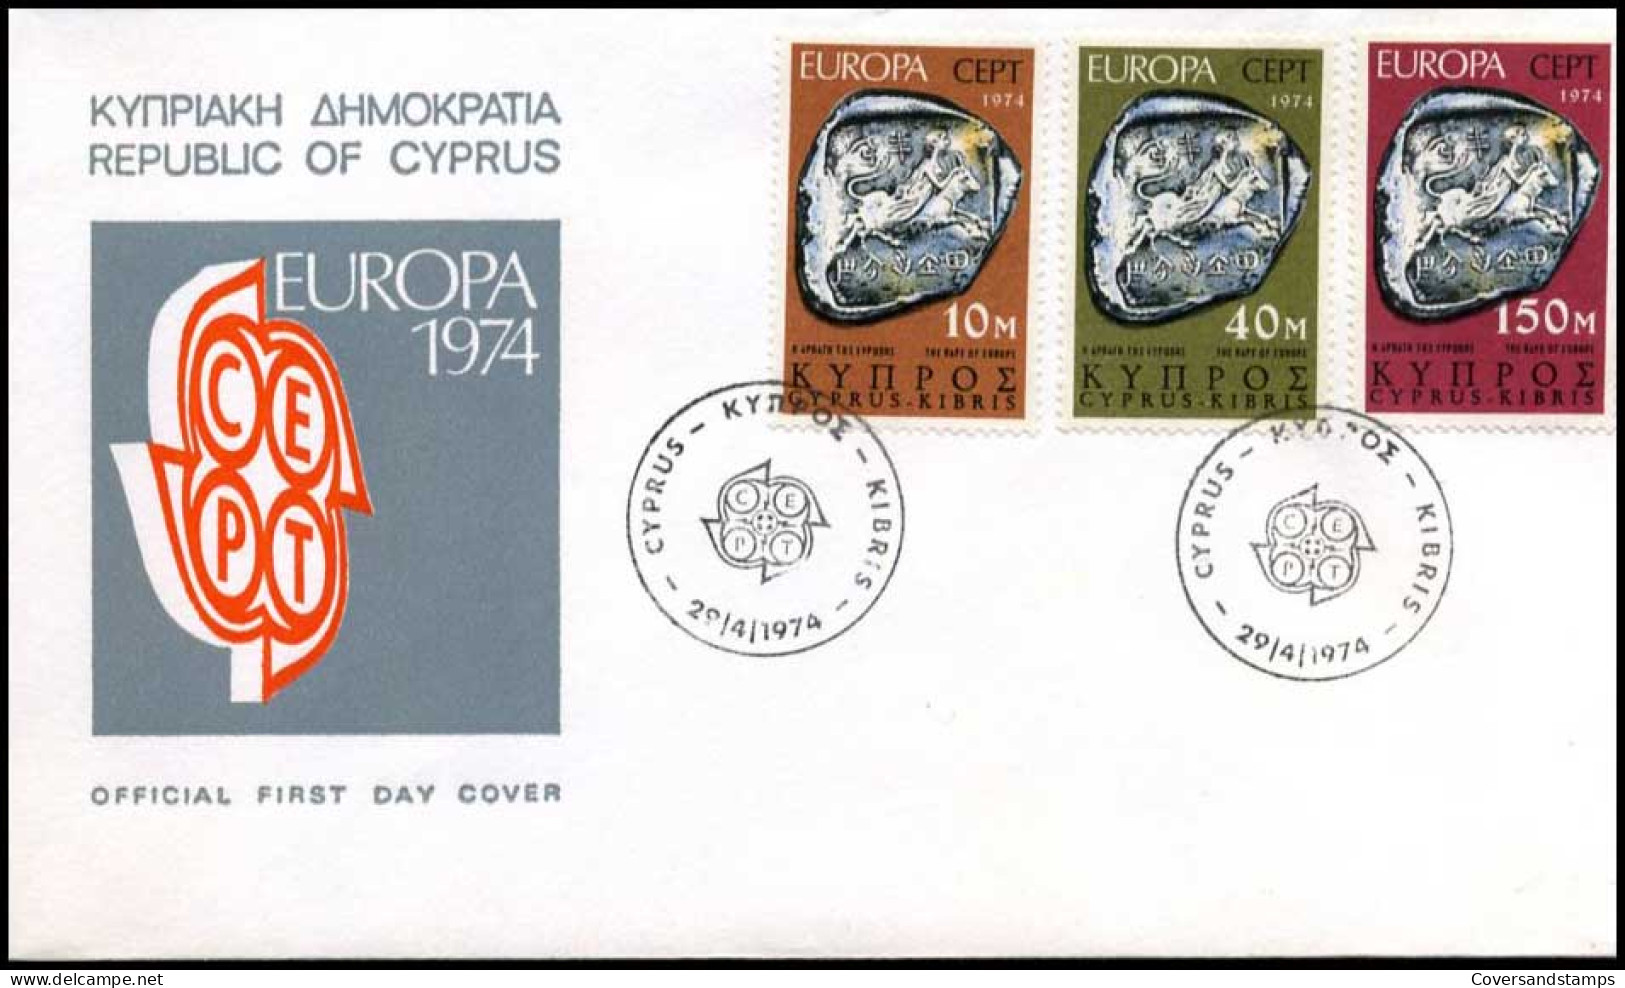  Grieks Cyprus  - FDC - Europa CEPT 1974 - 1974